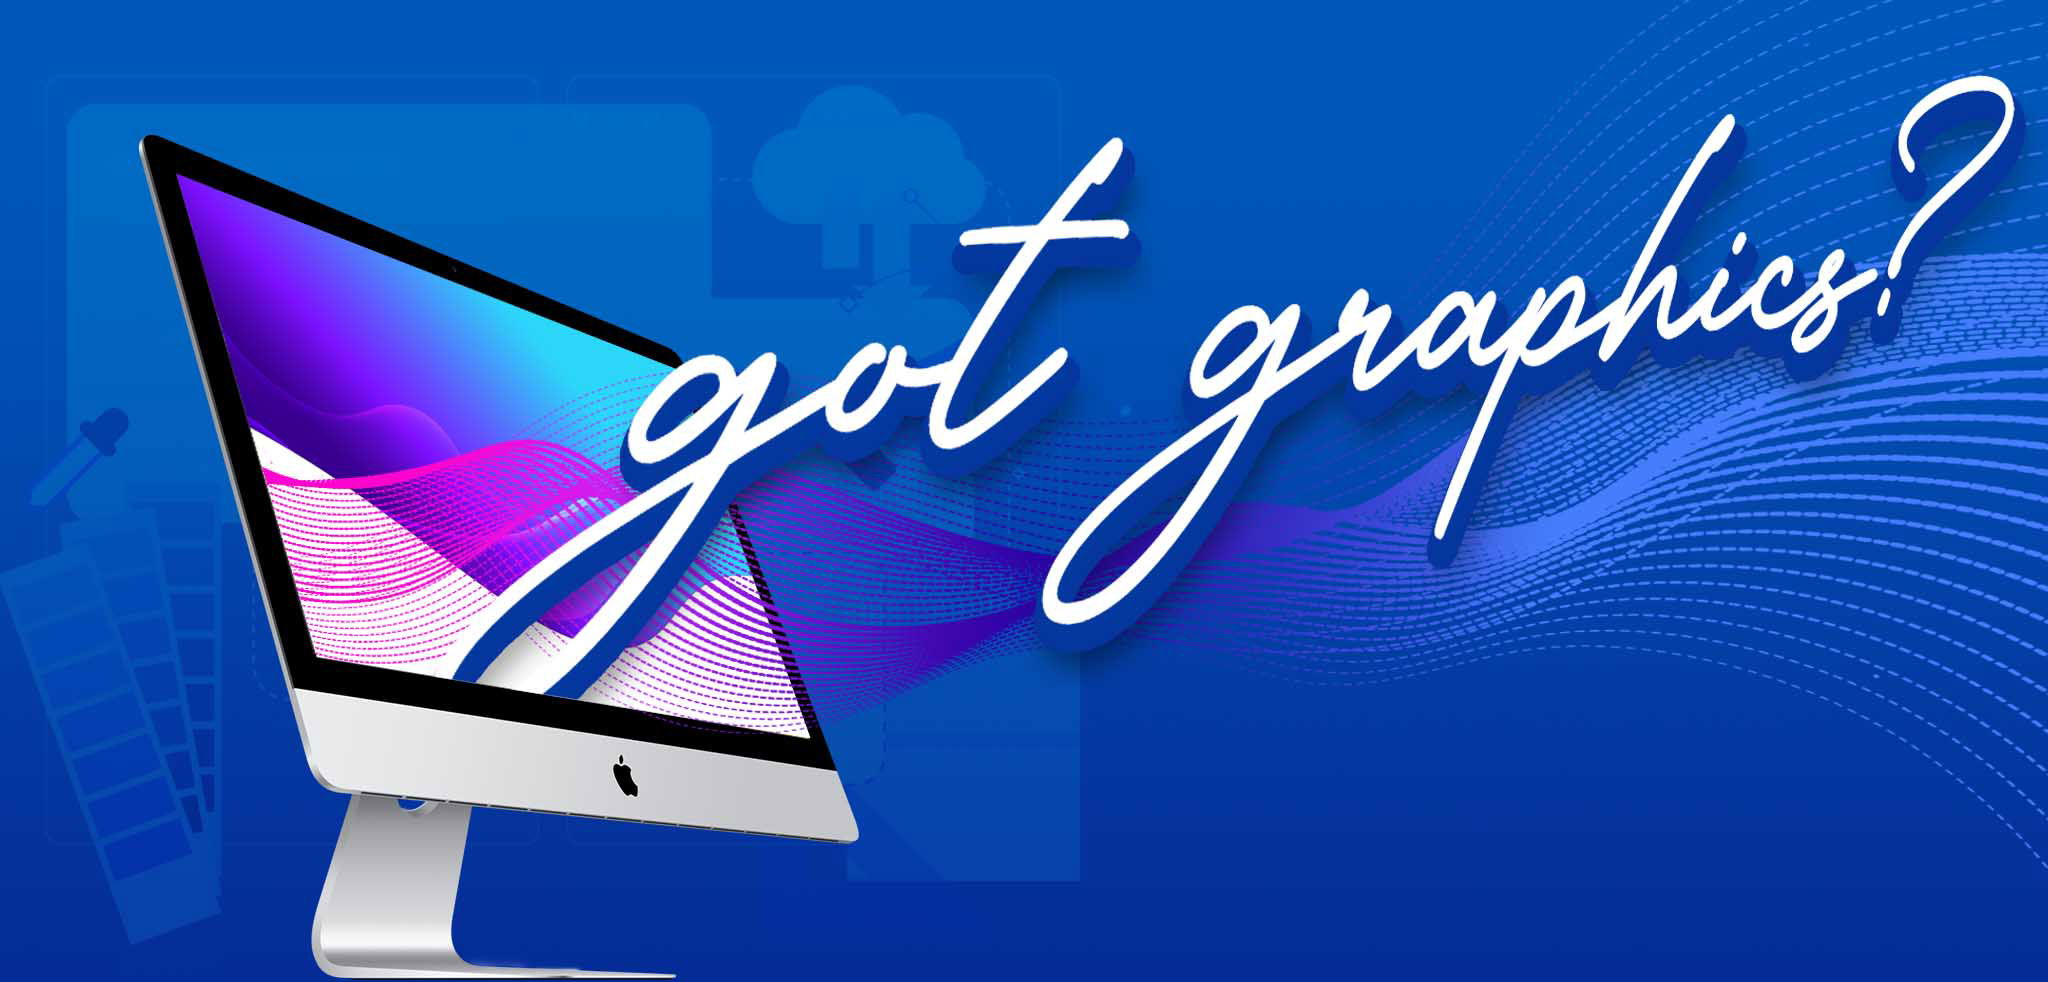 Graphic Designer Geeks | Got Graphics 3